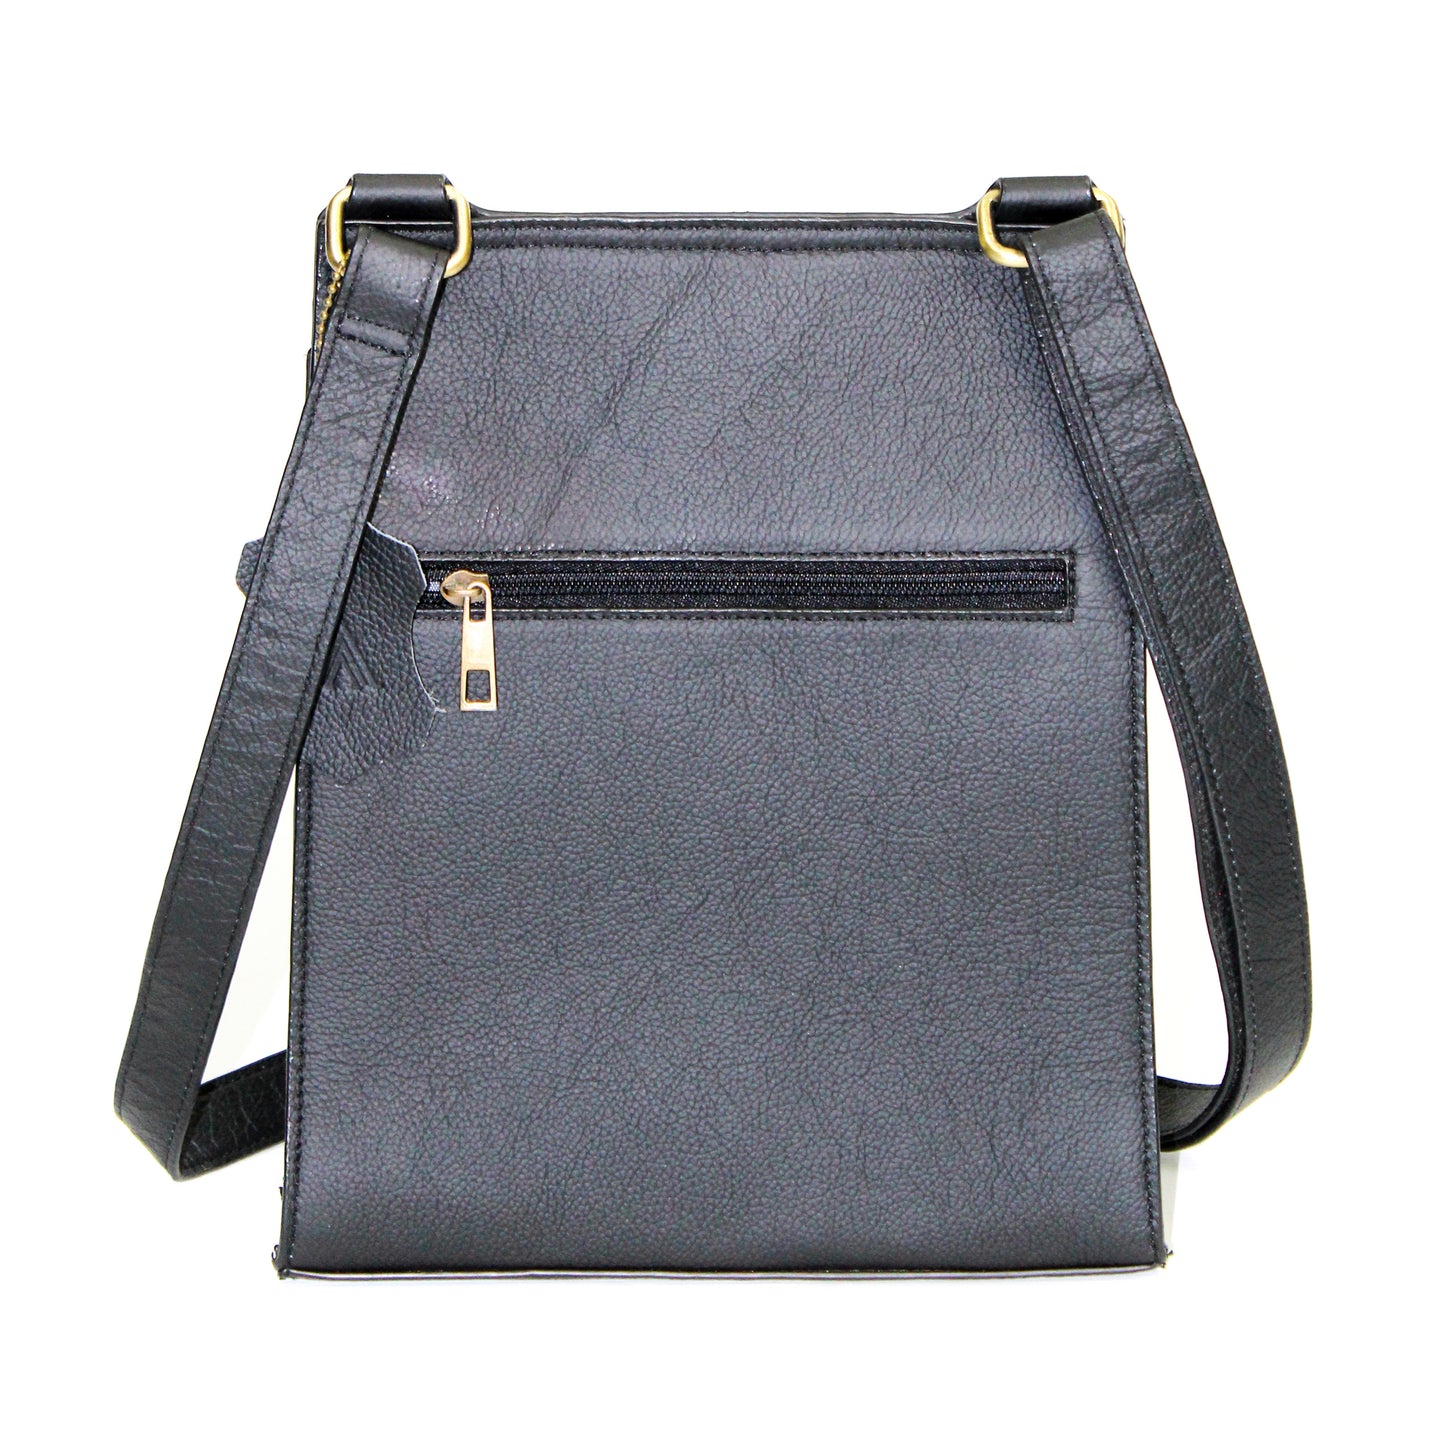 Pebbled Black Leather Flap Bag